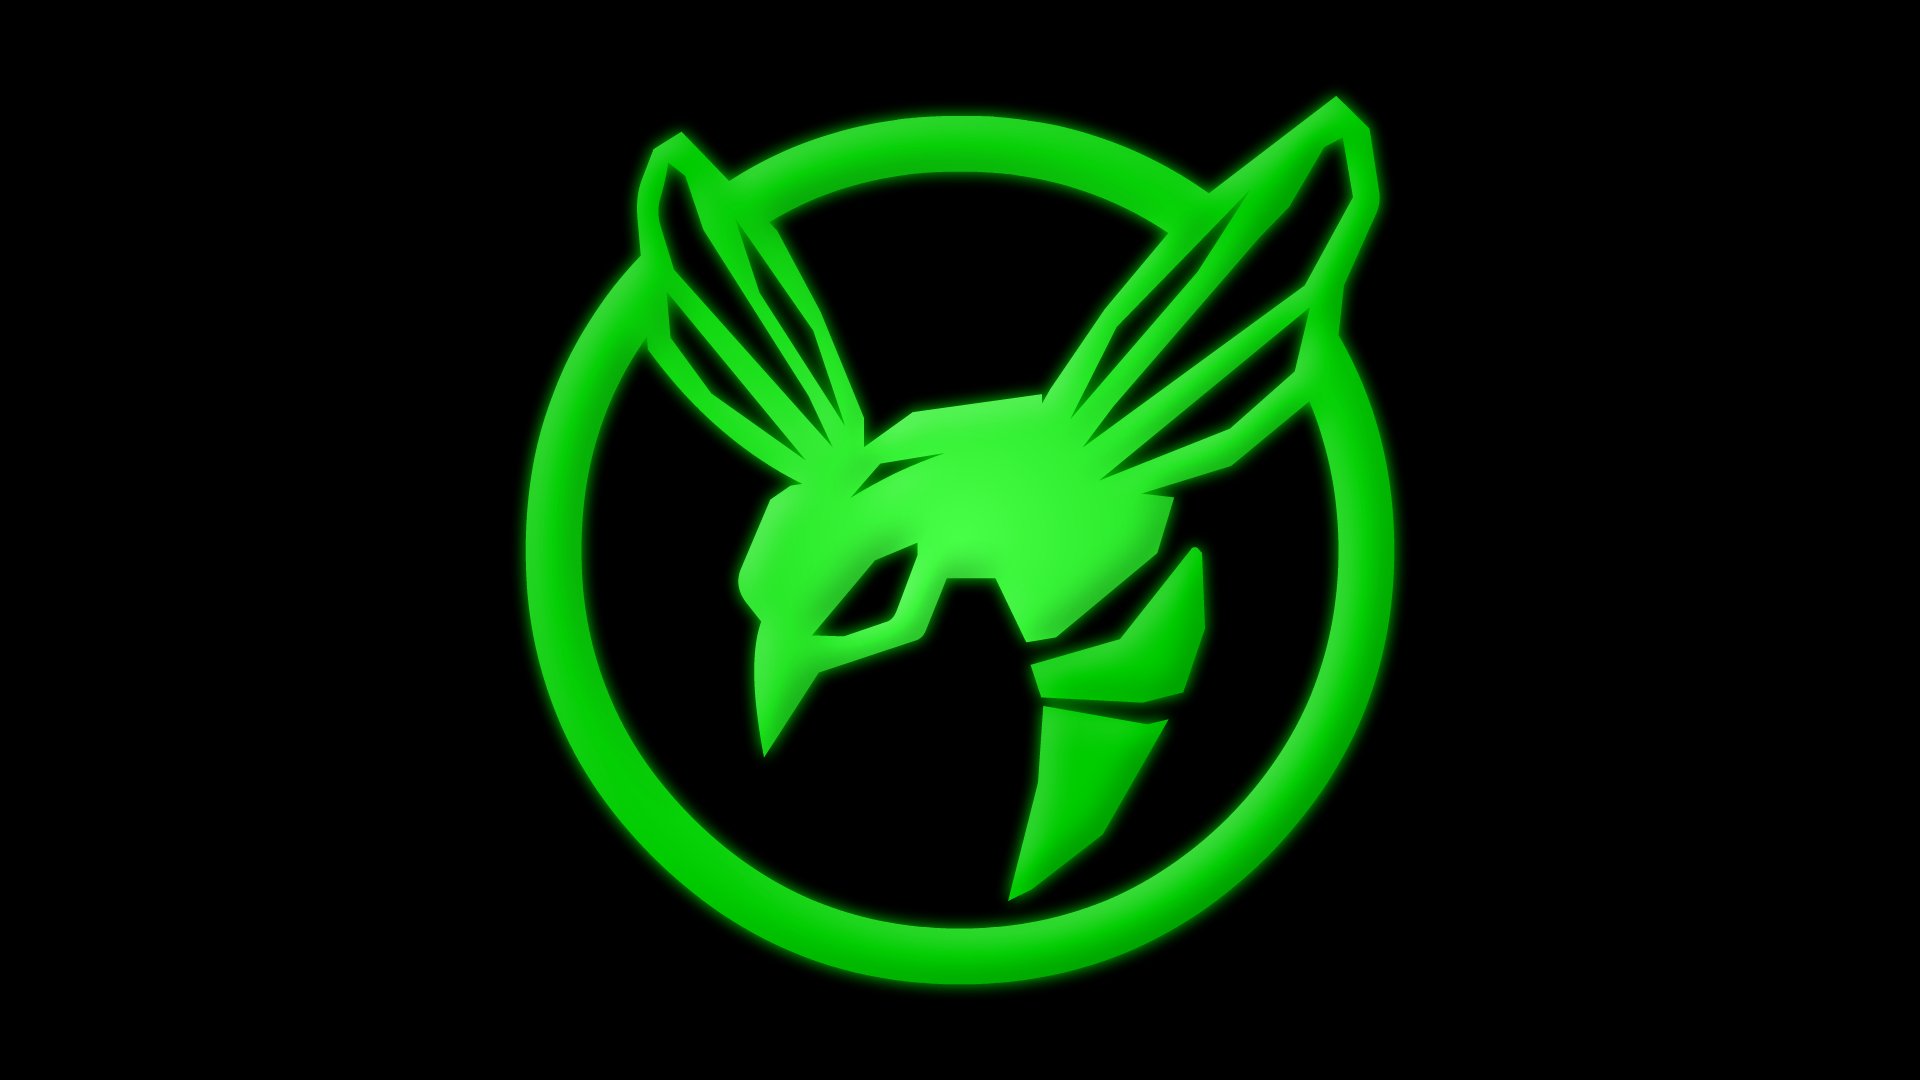 Green Hornet Symbol by Yurtigo on DeviantArt